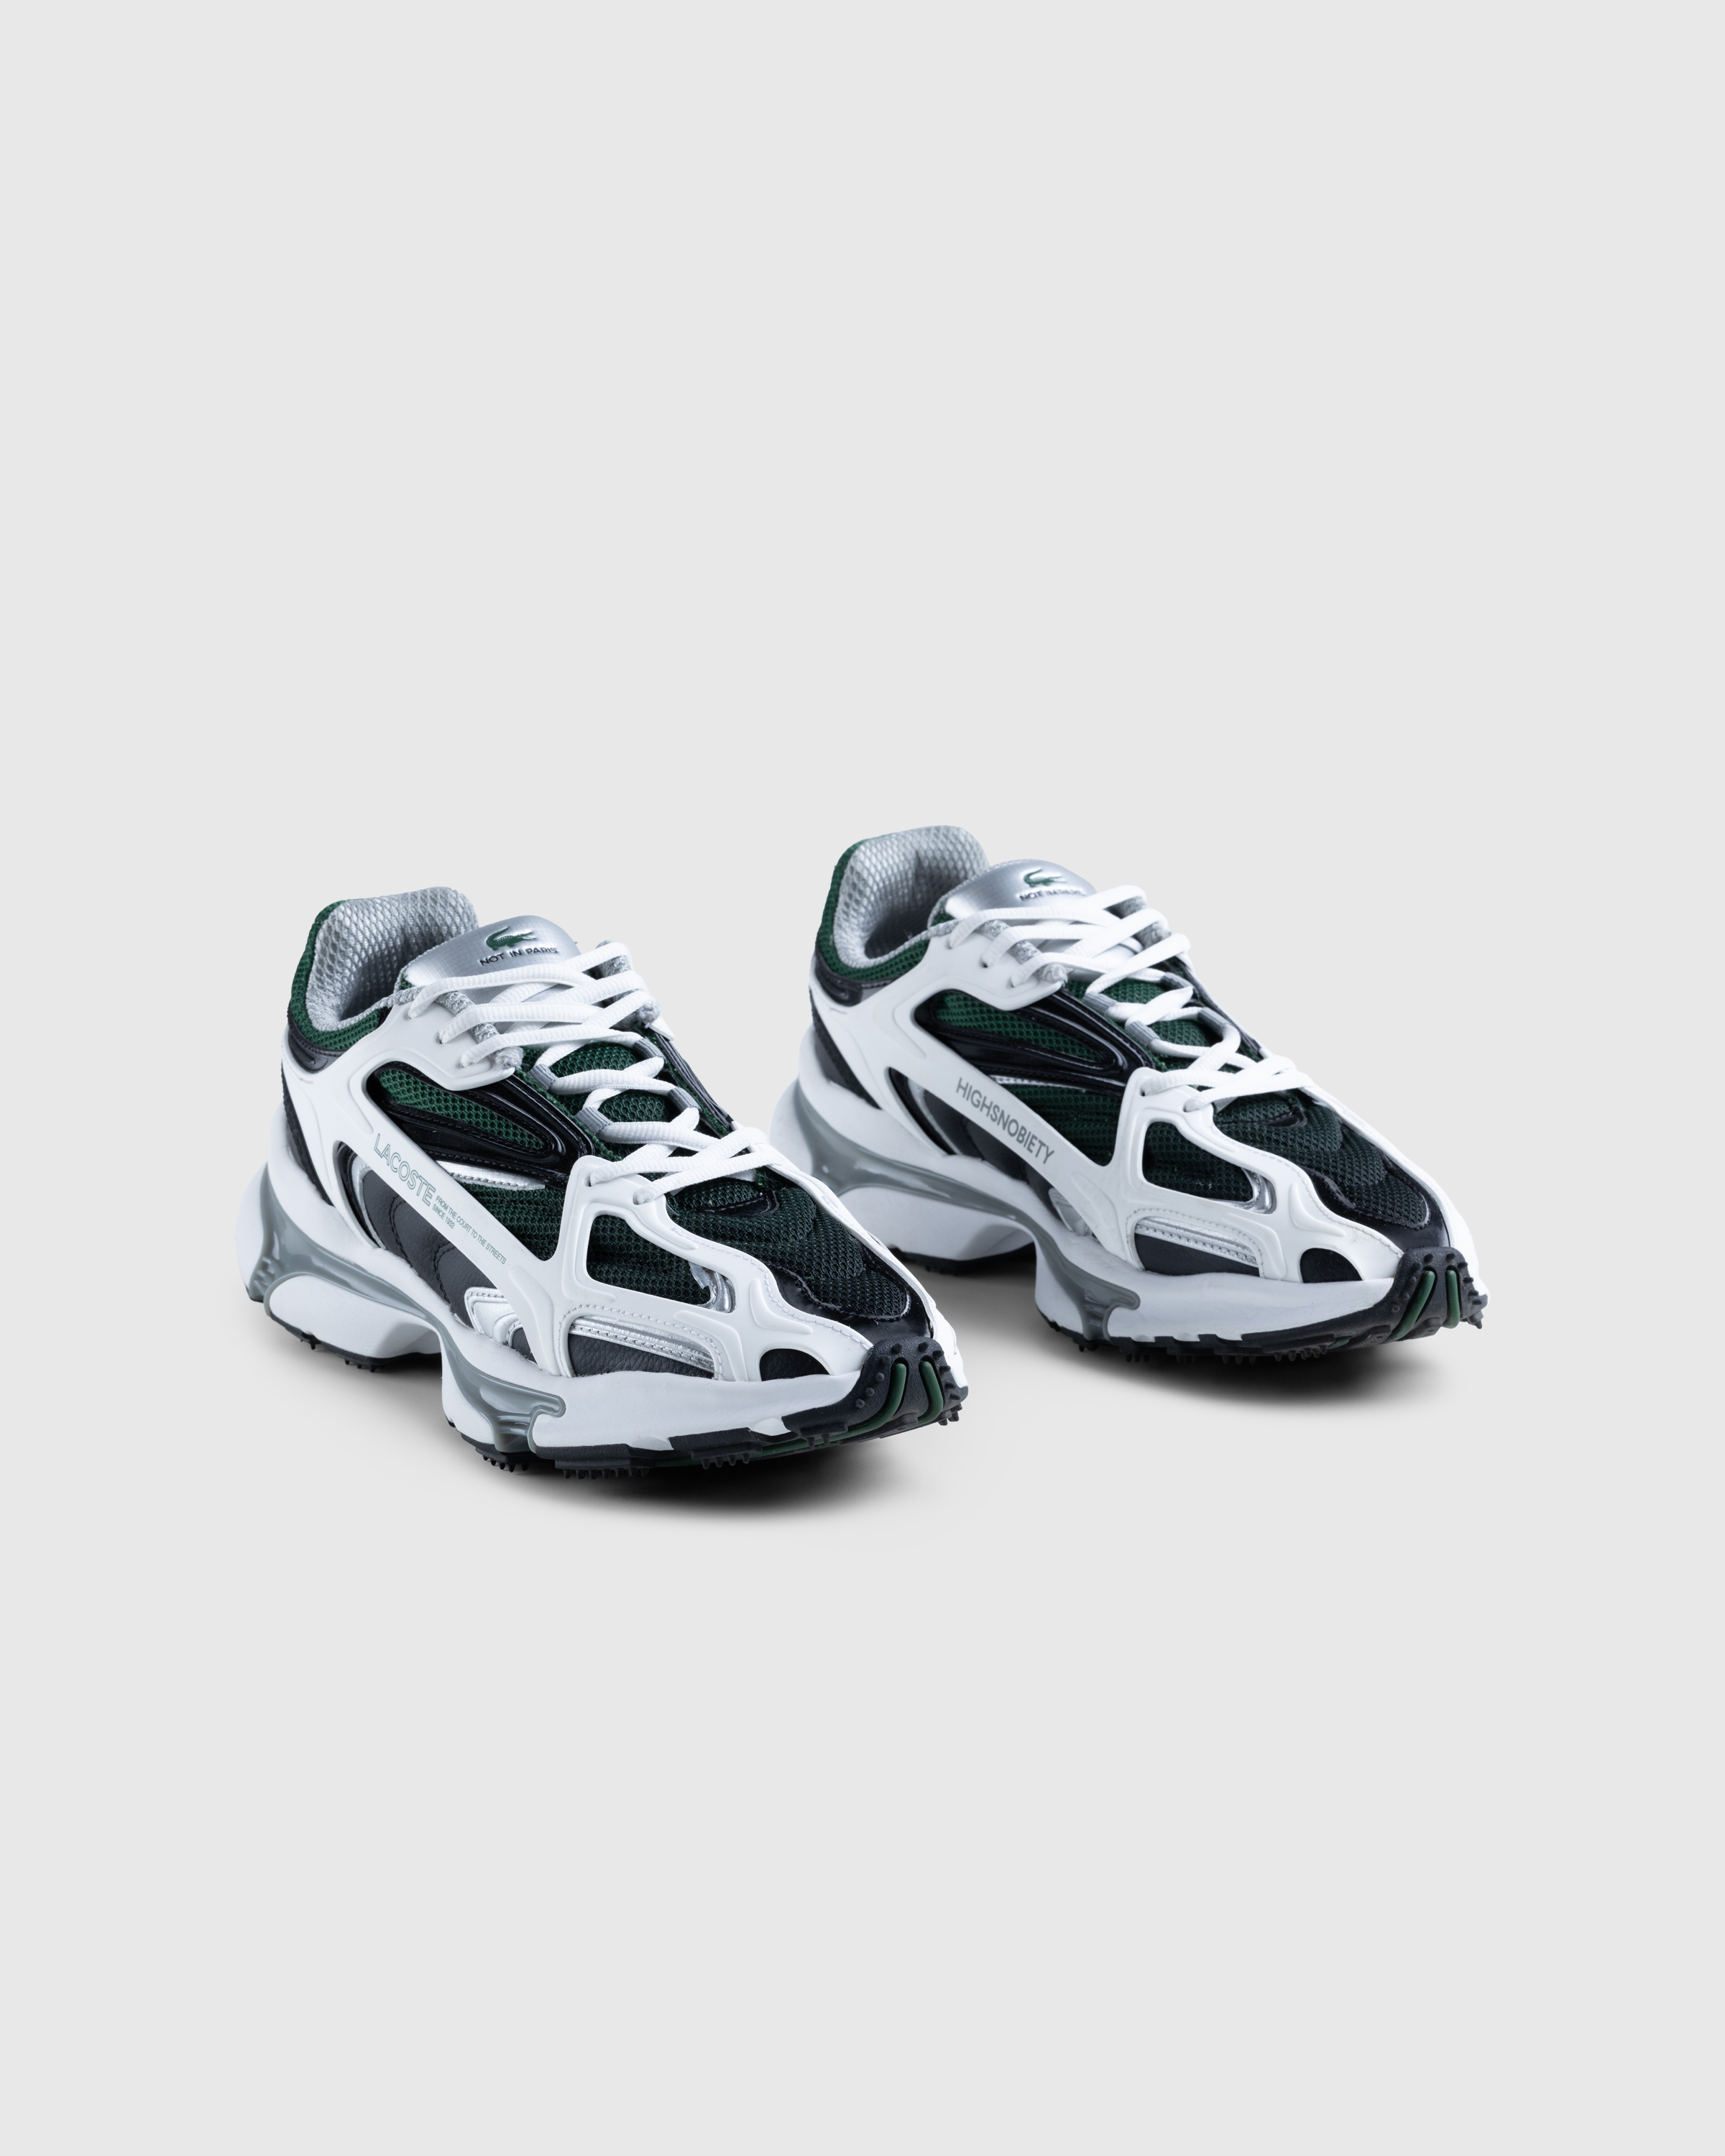 Lacoste x Highsnobiety – L003 2k24 (W) "Not In Paris" Multi - Low Top Sneakers - Green - Image 3